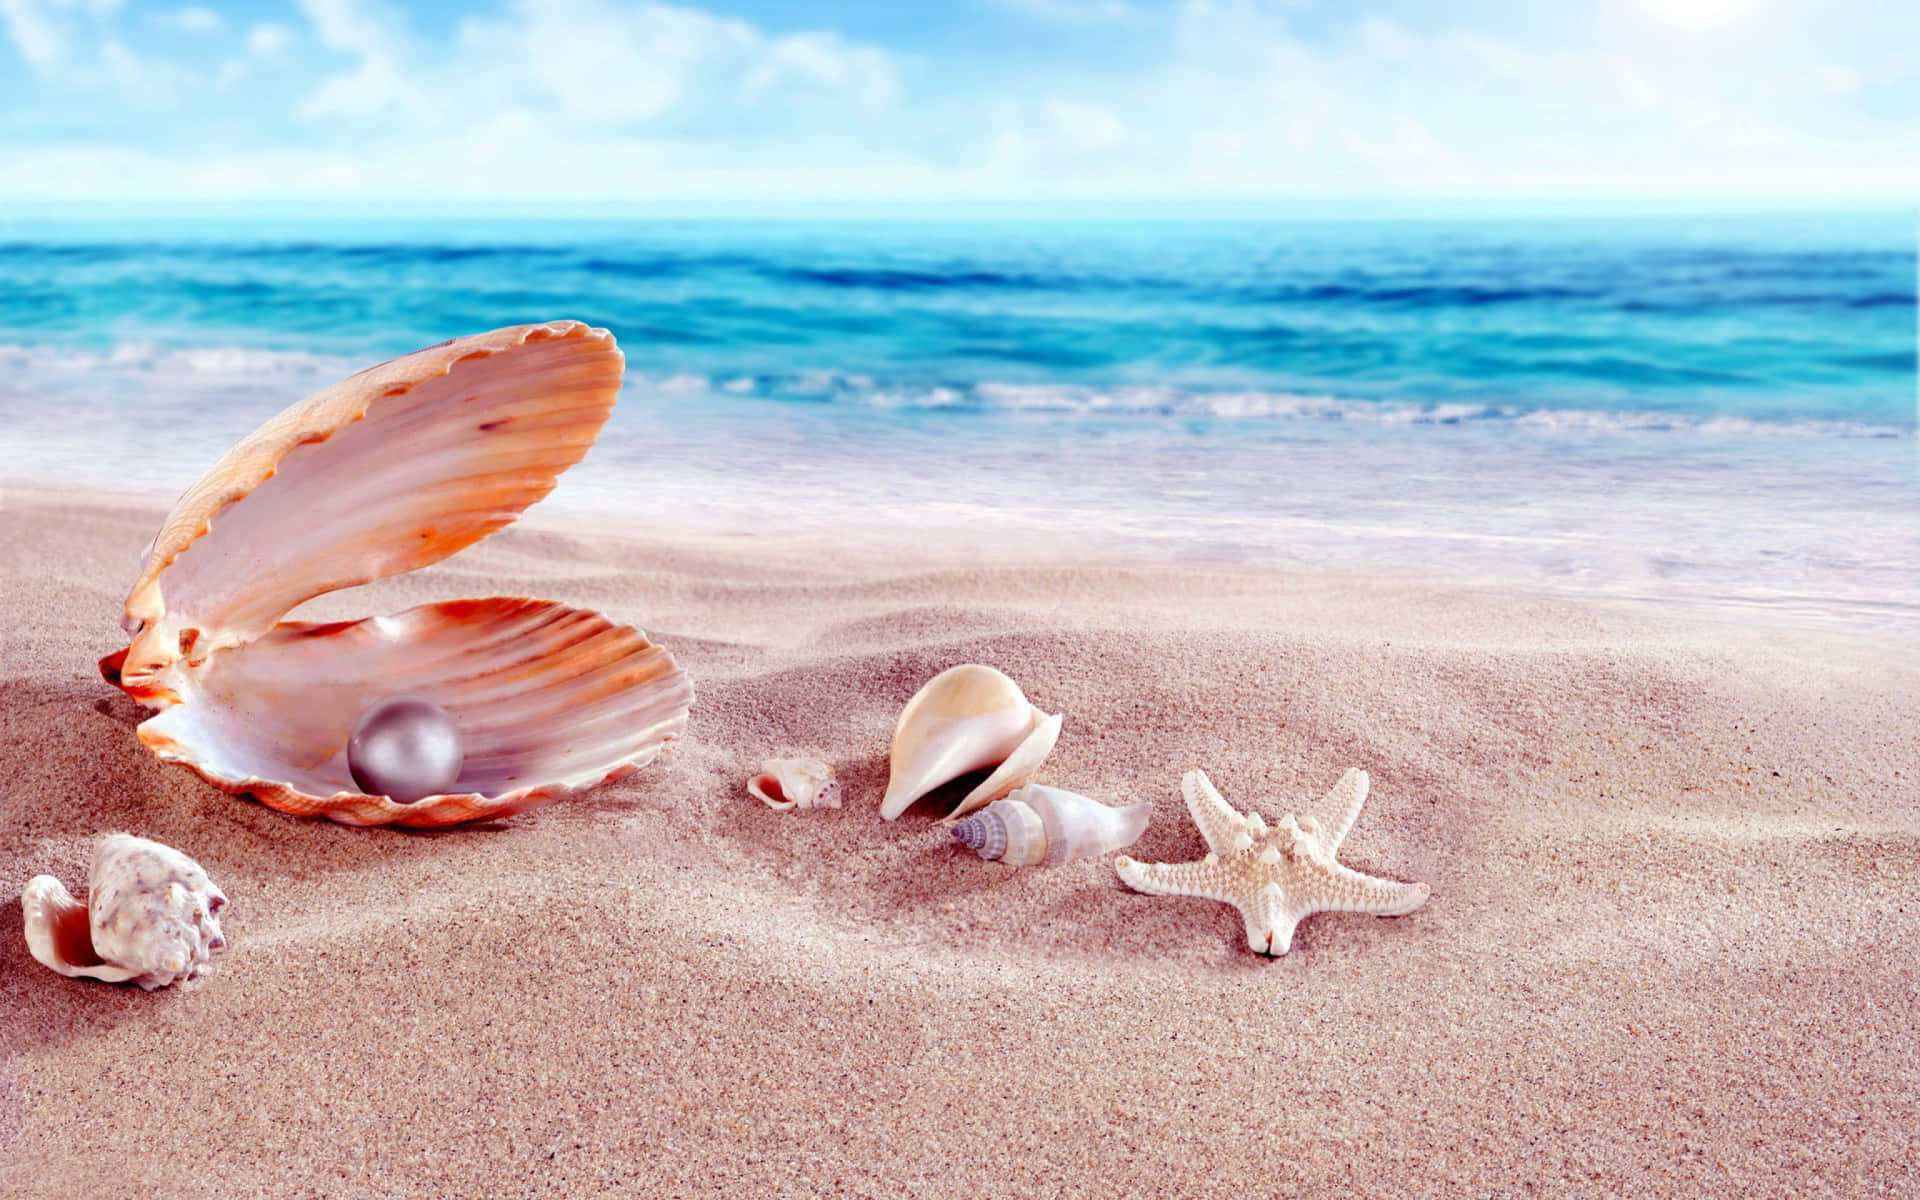 Scattered Seashells on the Shore